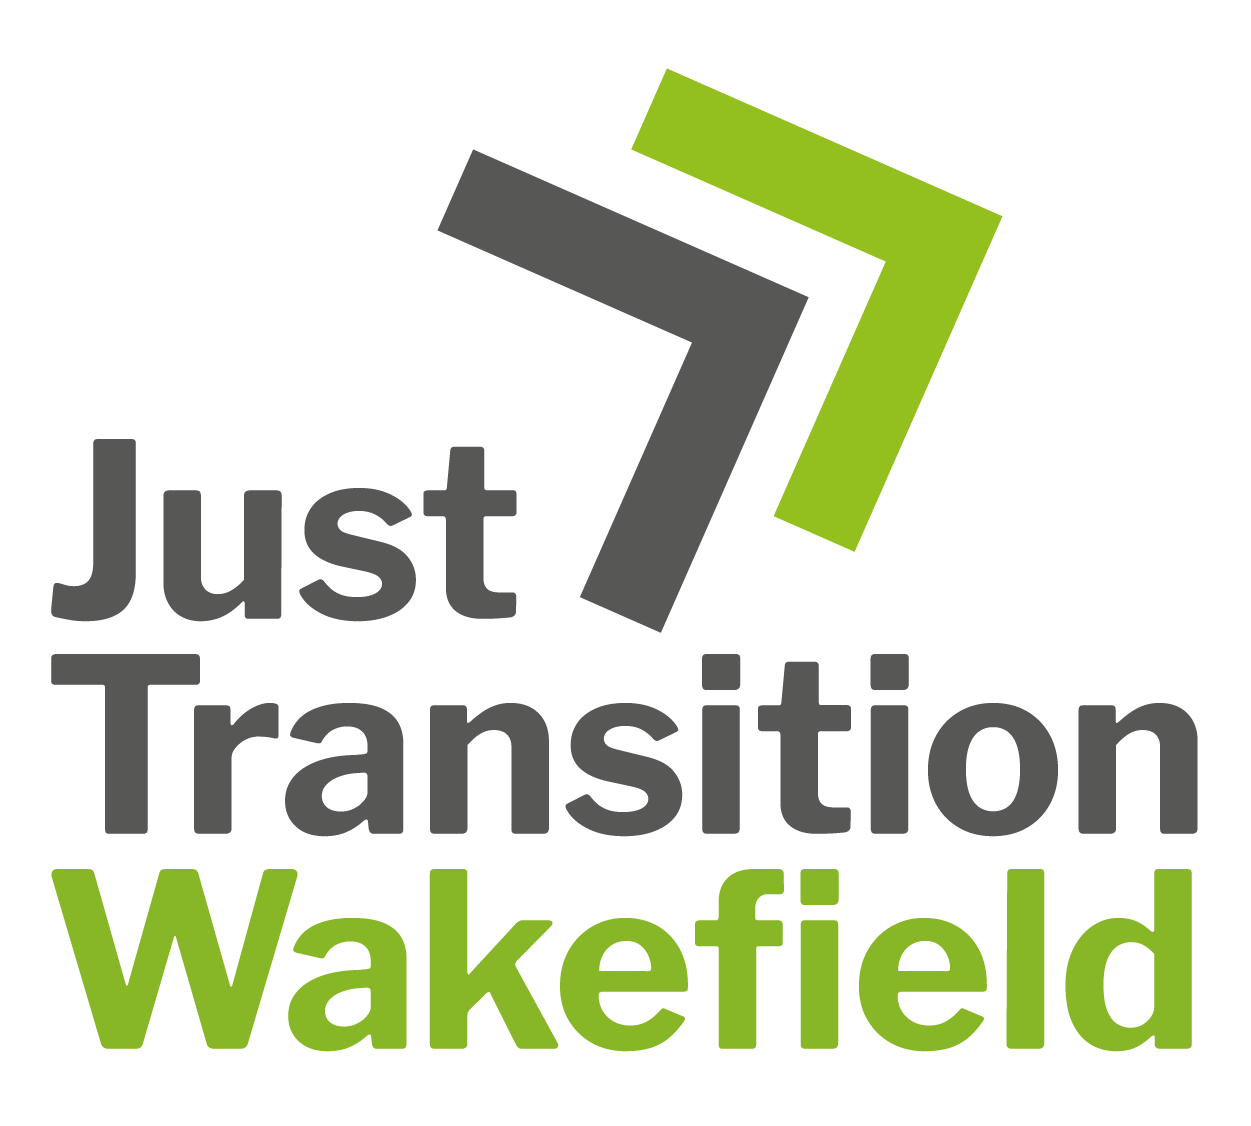 Just Transition Wakefield logo